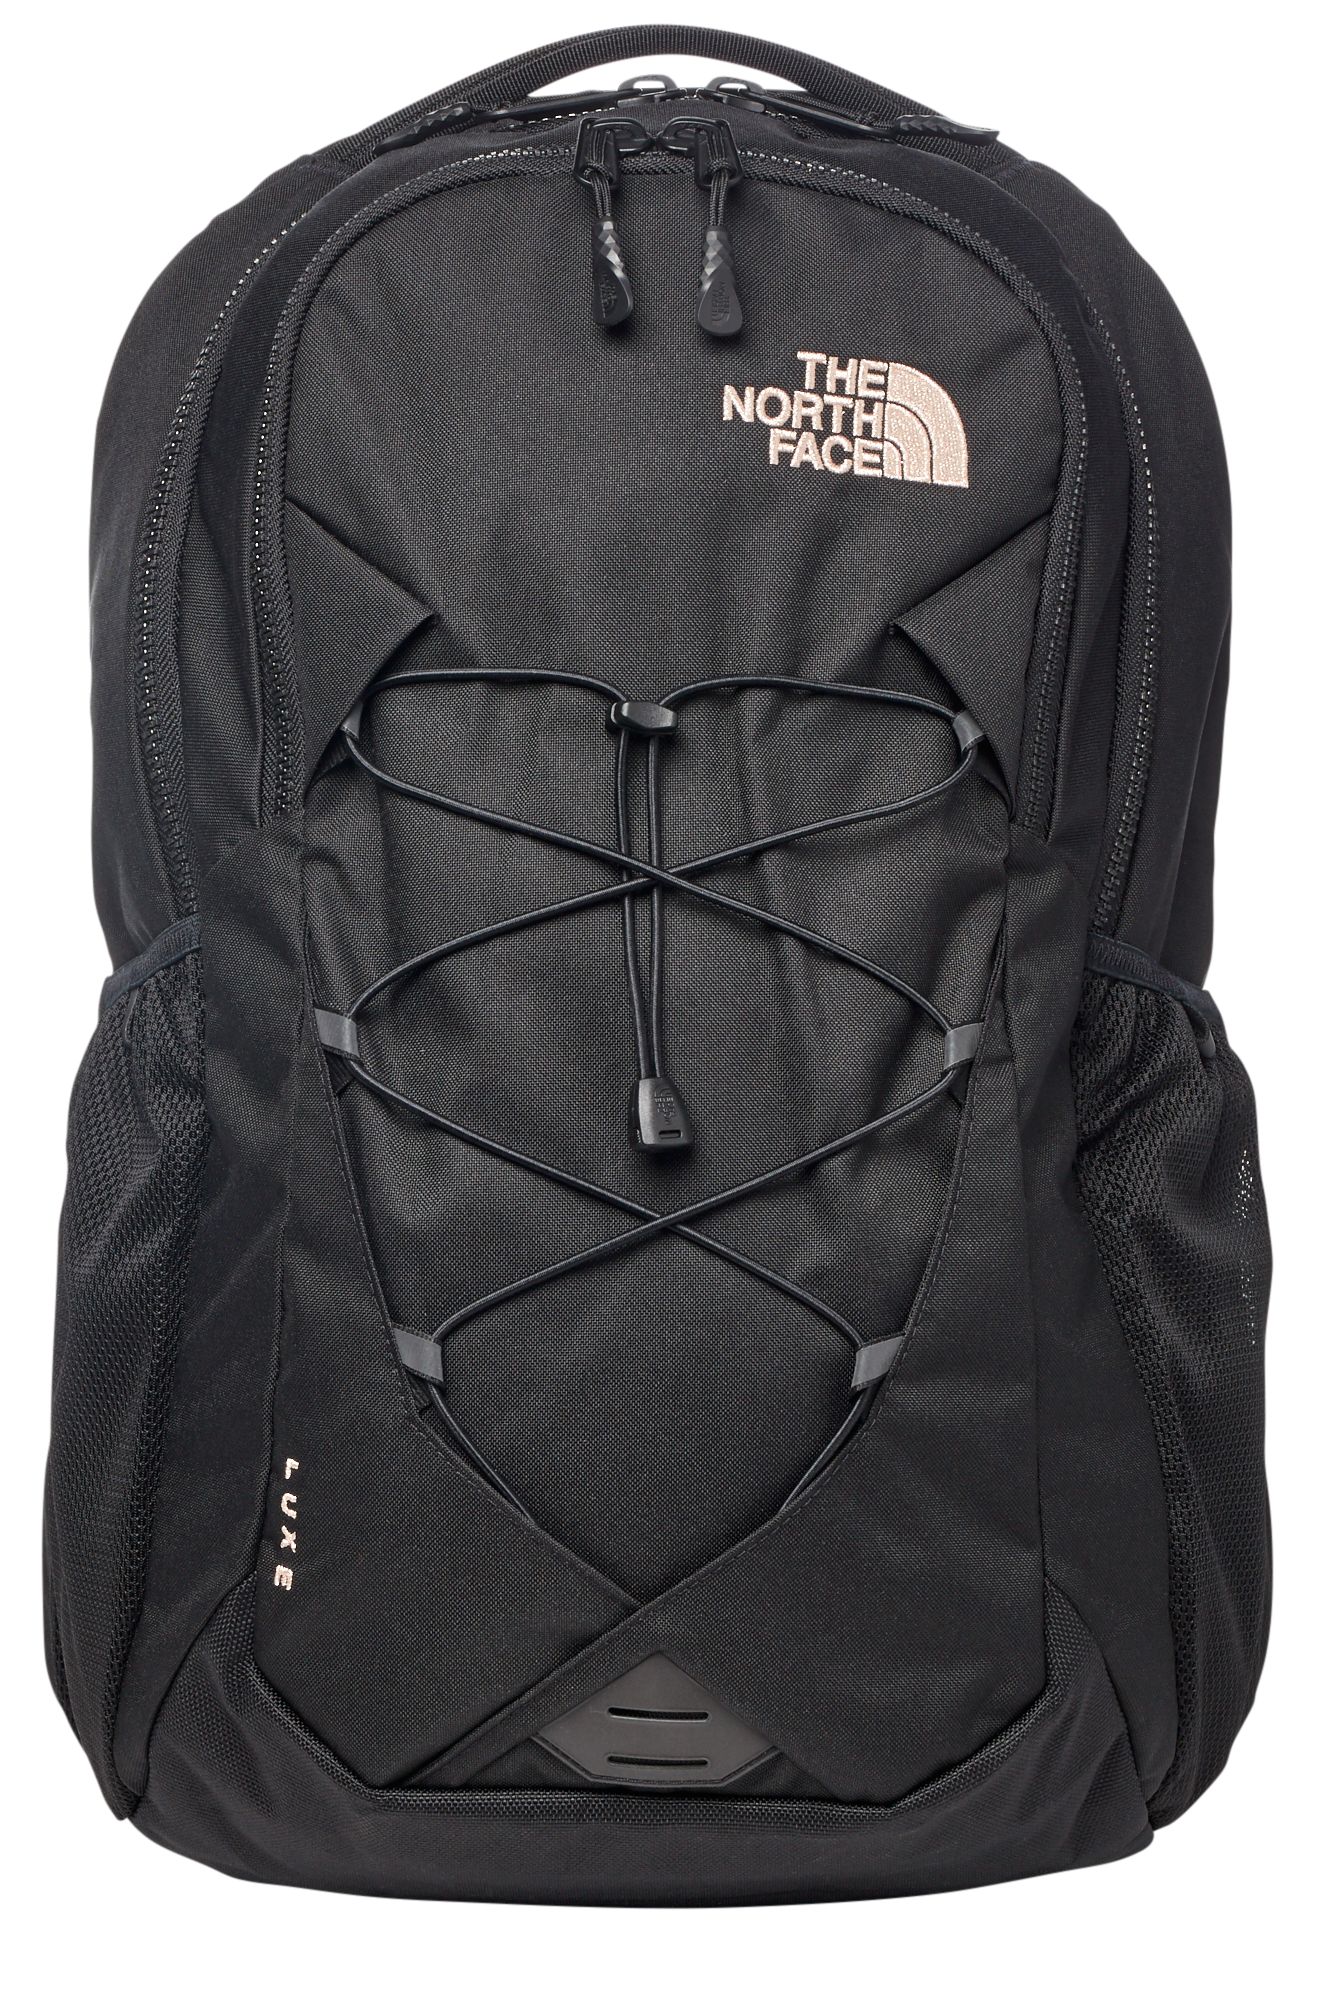 north face backpack under $50